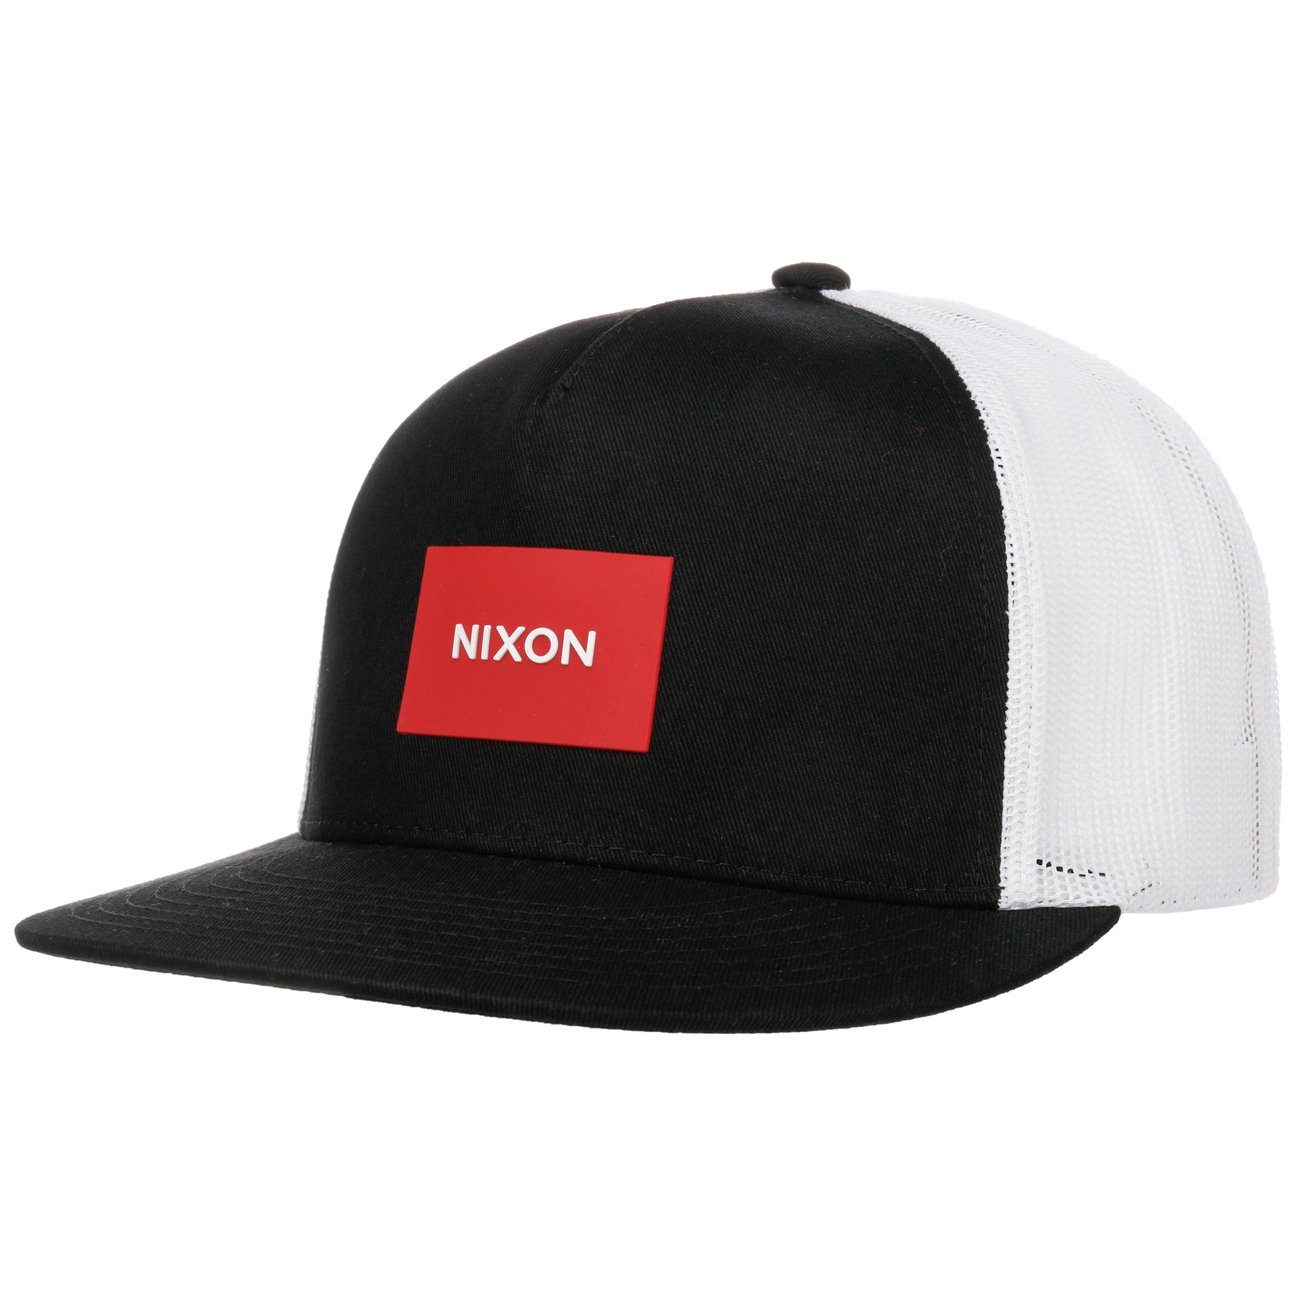 Nixon (1-St) Cap Trucker schwarz-rot Basecap Snapback